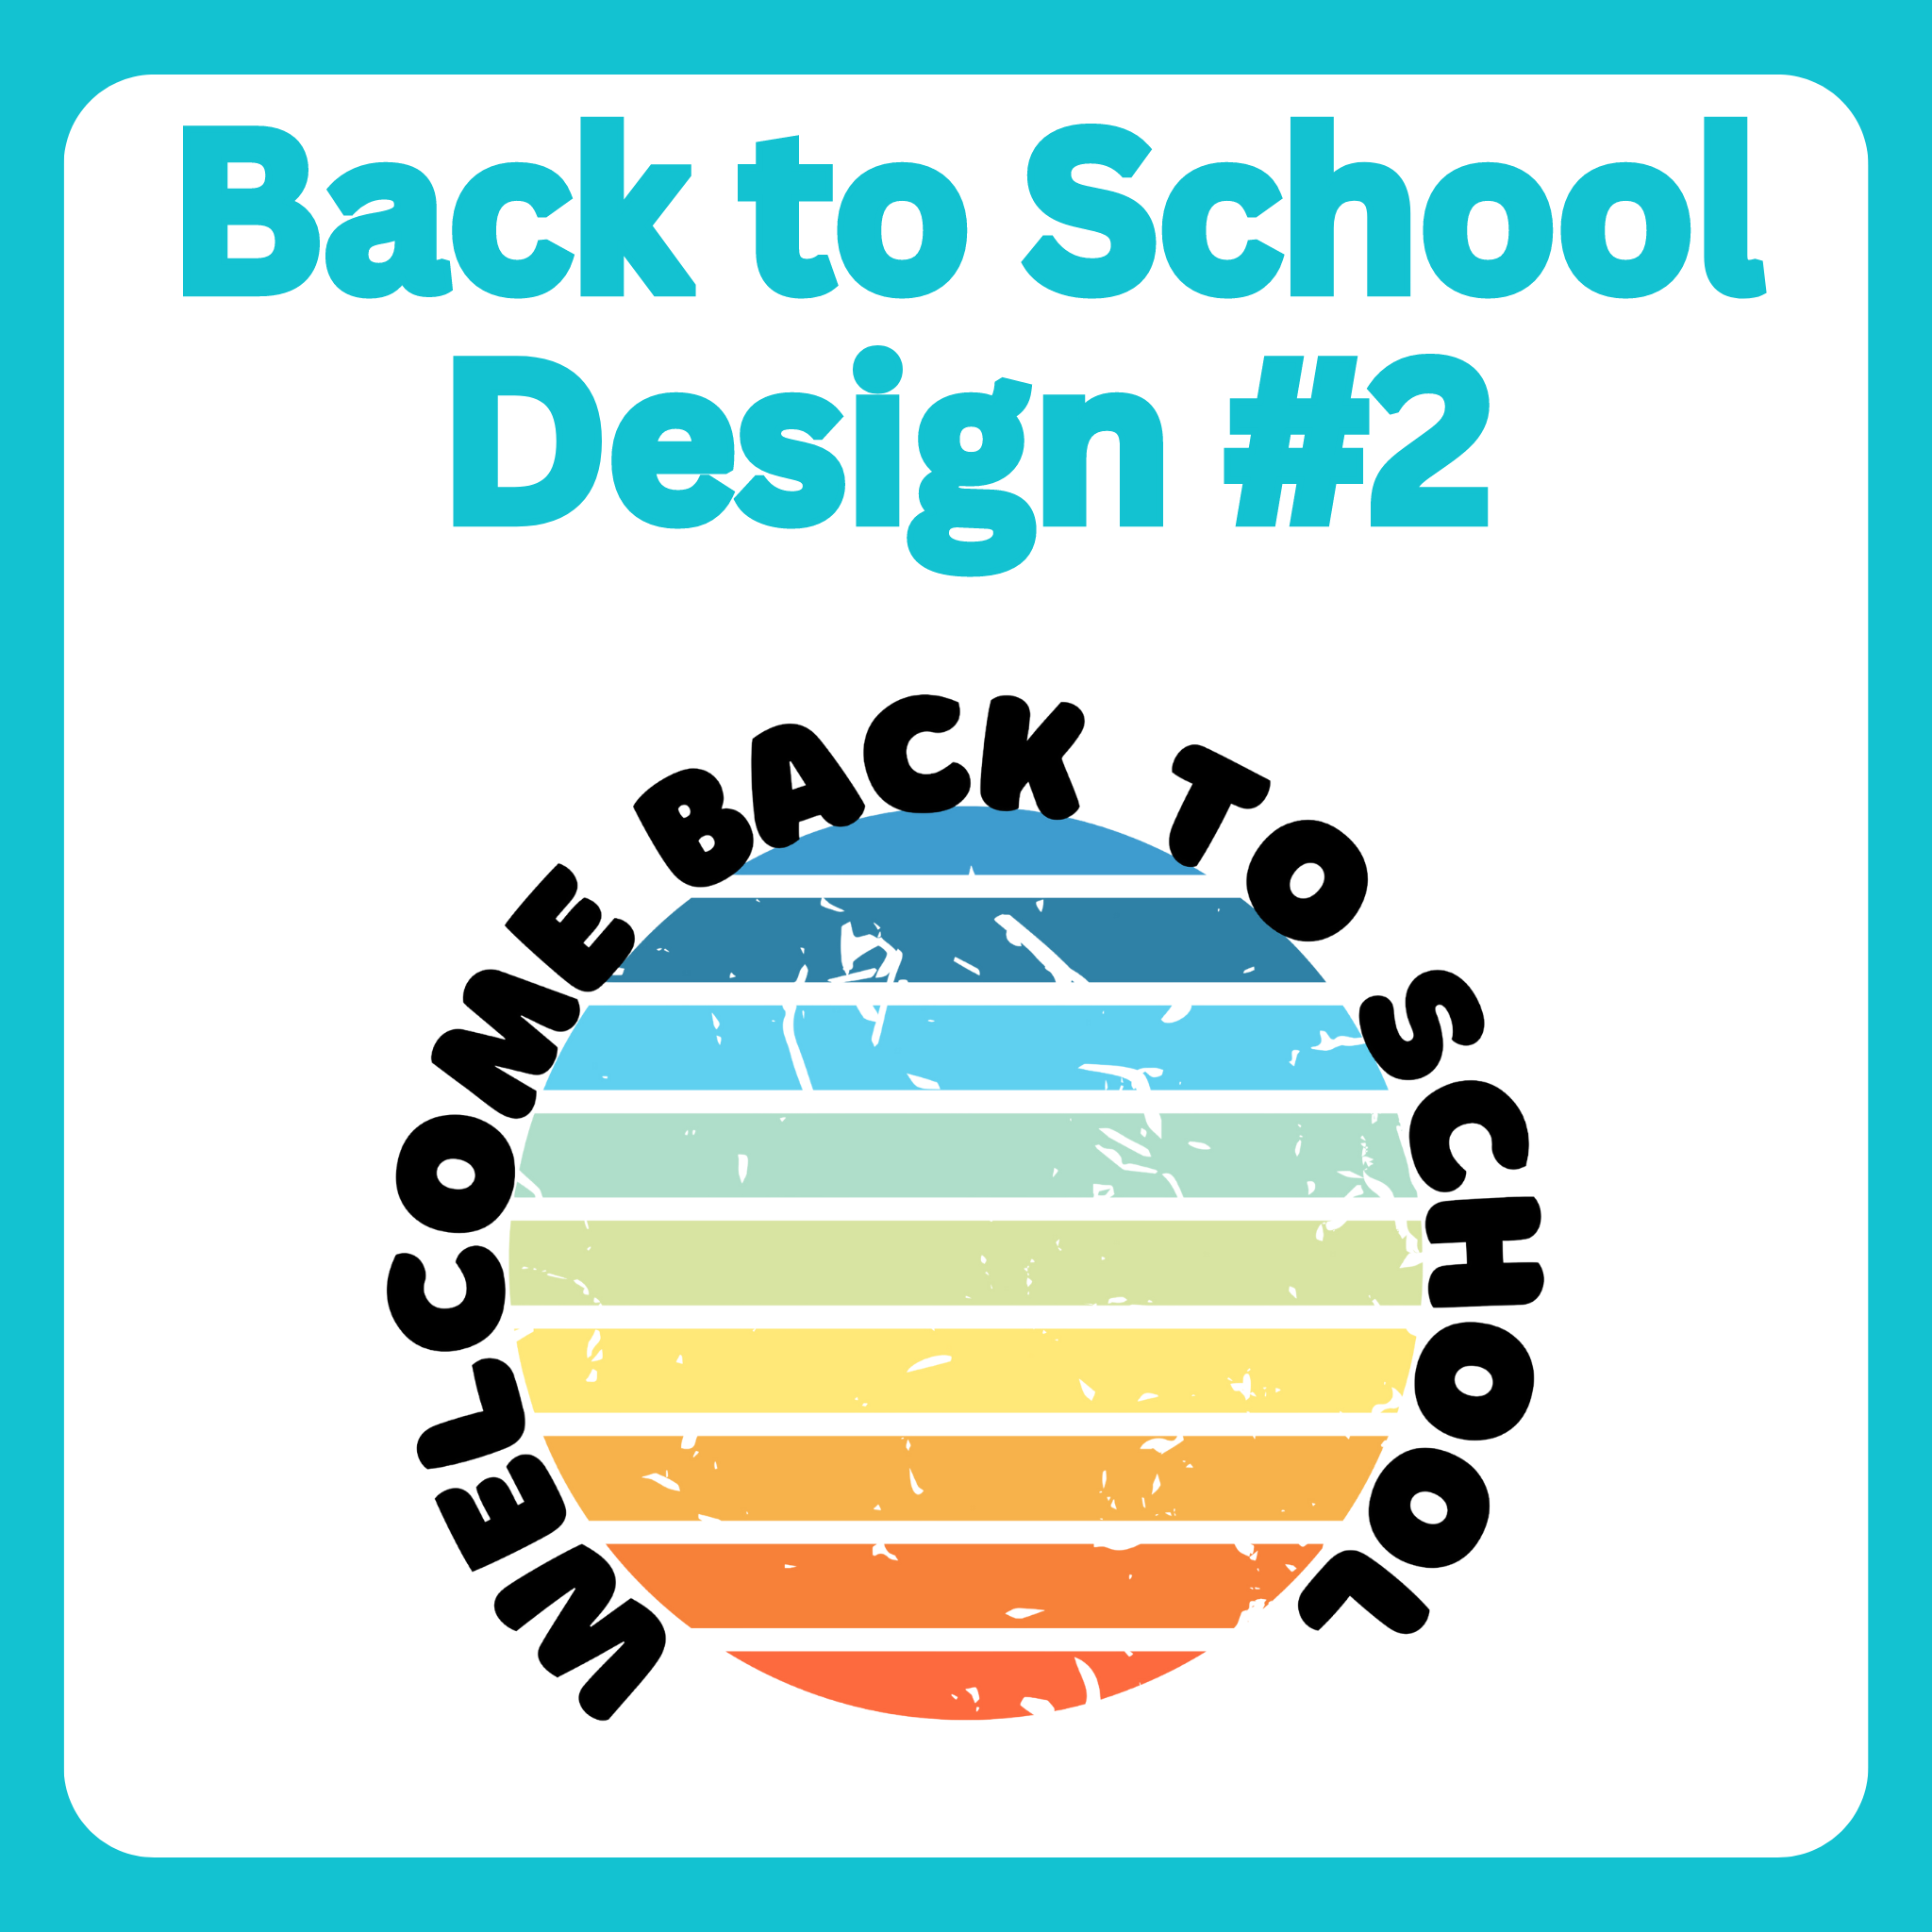 Back to School Design #2